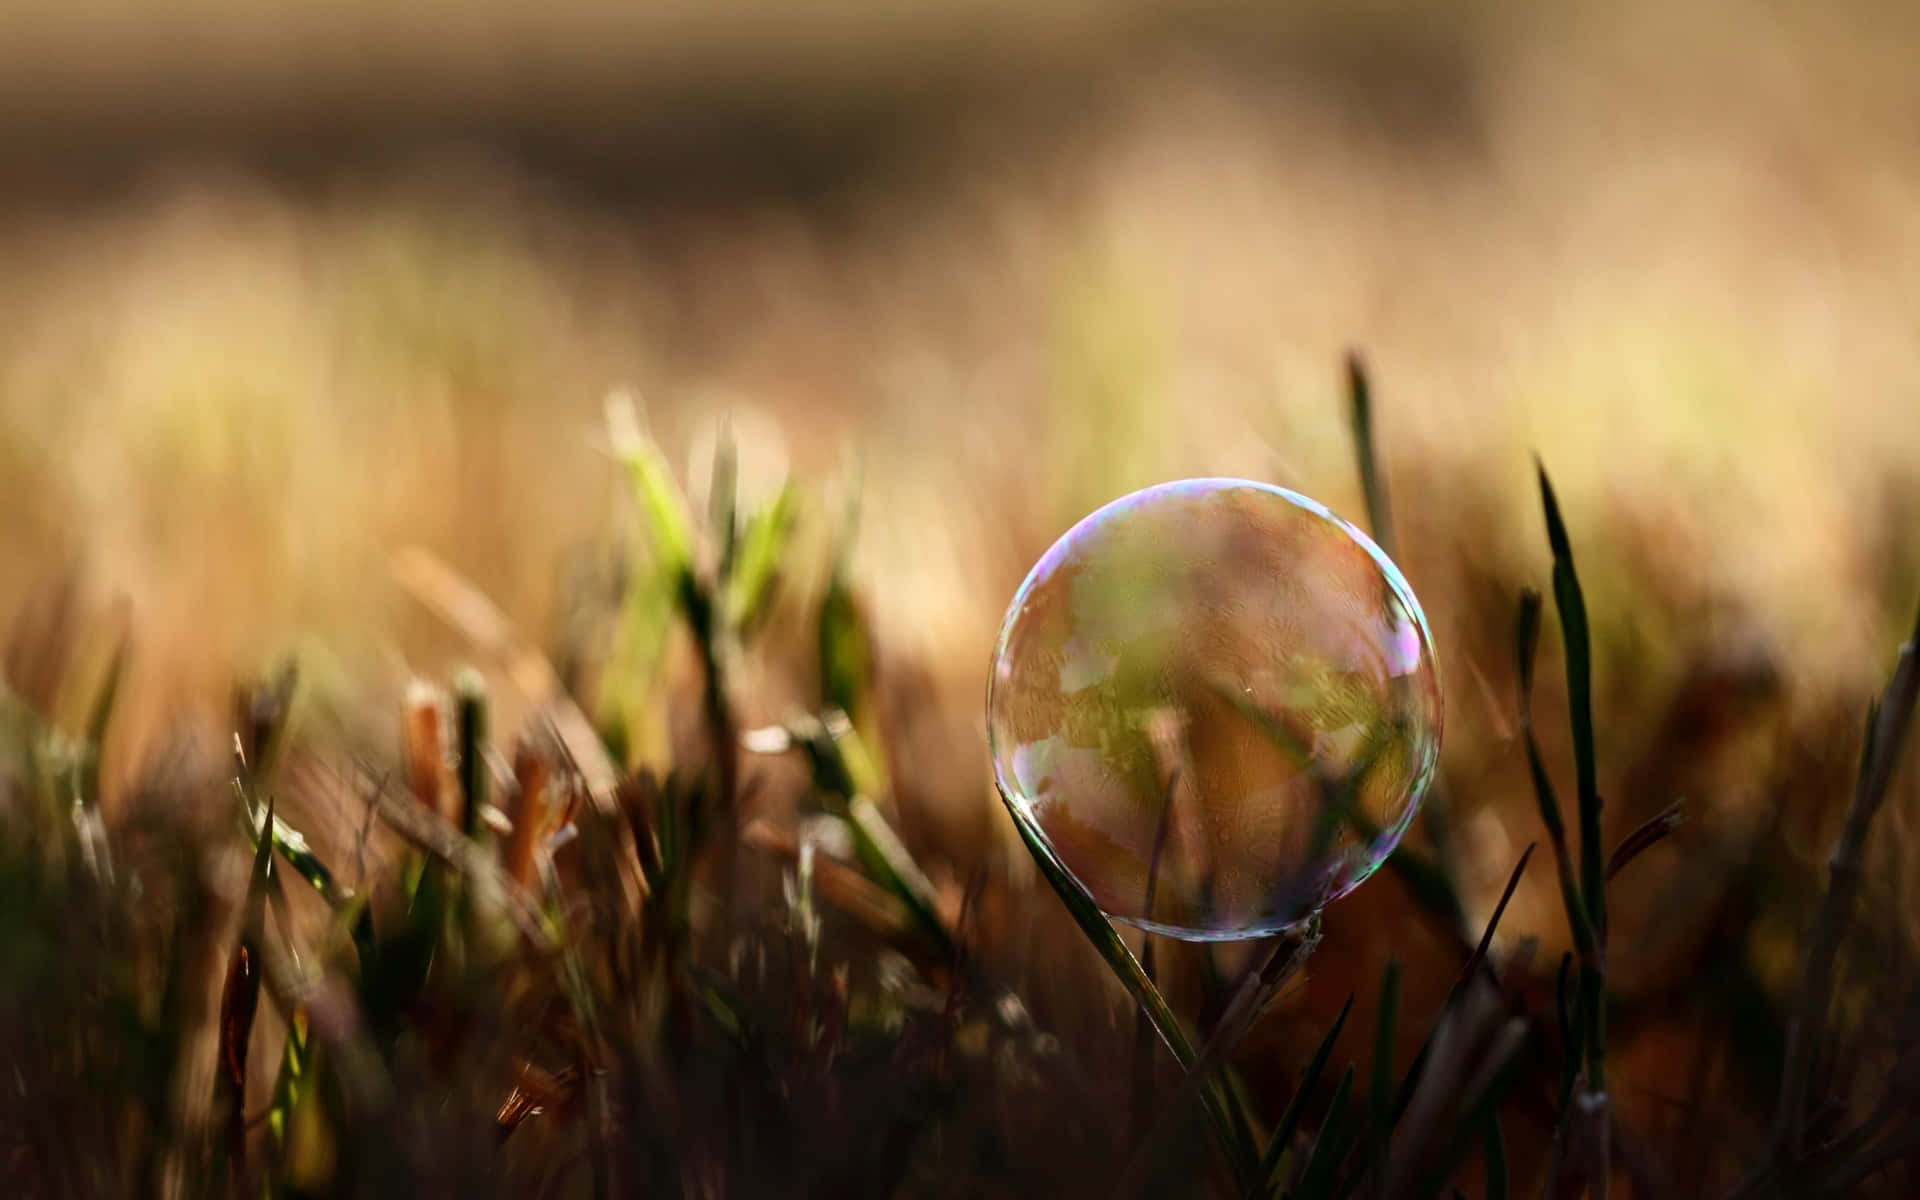 Bubbligtbakgrund På Gräset.